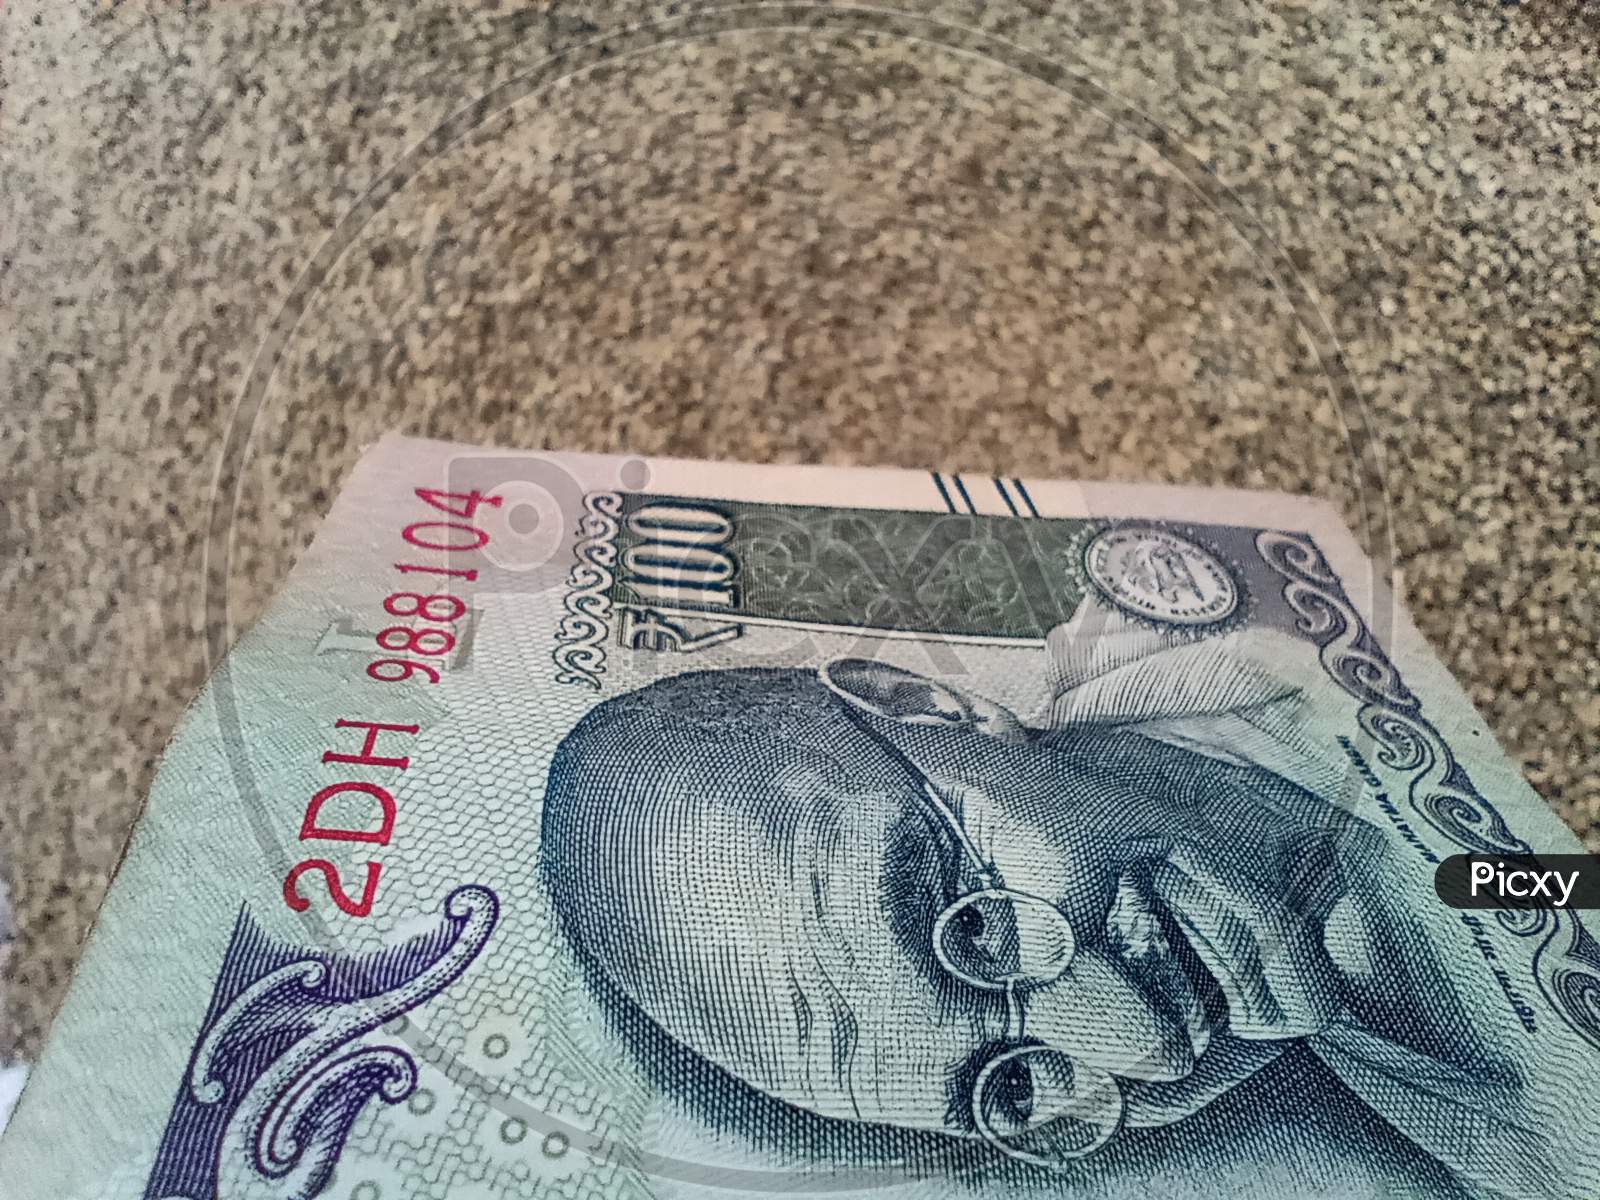 Gandhiji hundred rupee note capture